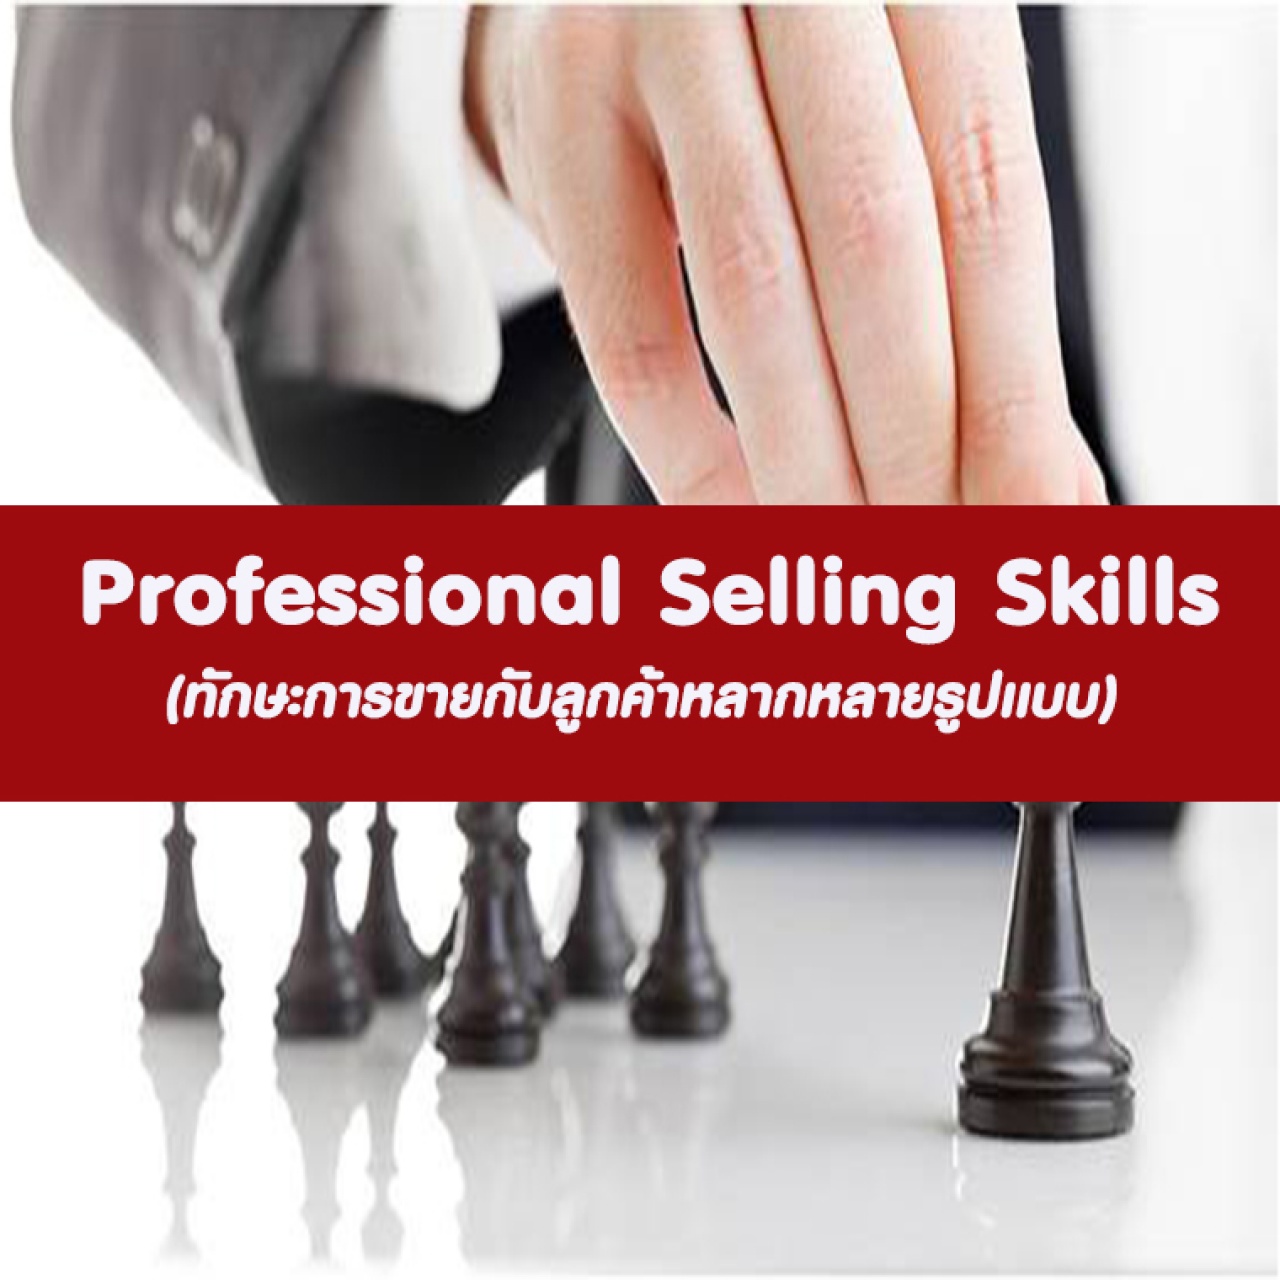 Professional Selling Skills ทักษะการขายกับลูกค้าหลากหลายรูปแบบ อบรม 20 ก.ค. 66